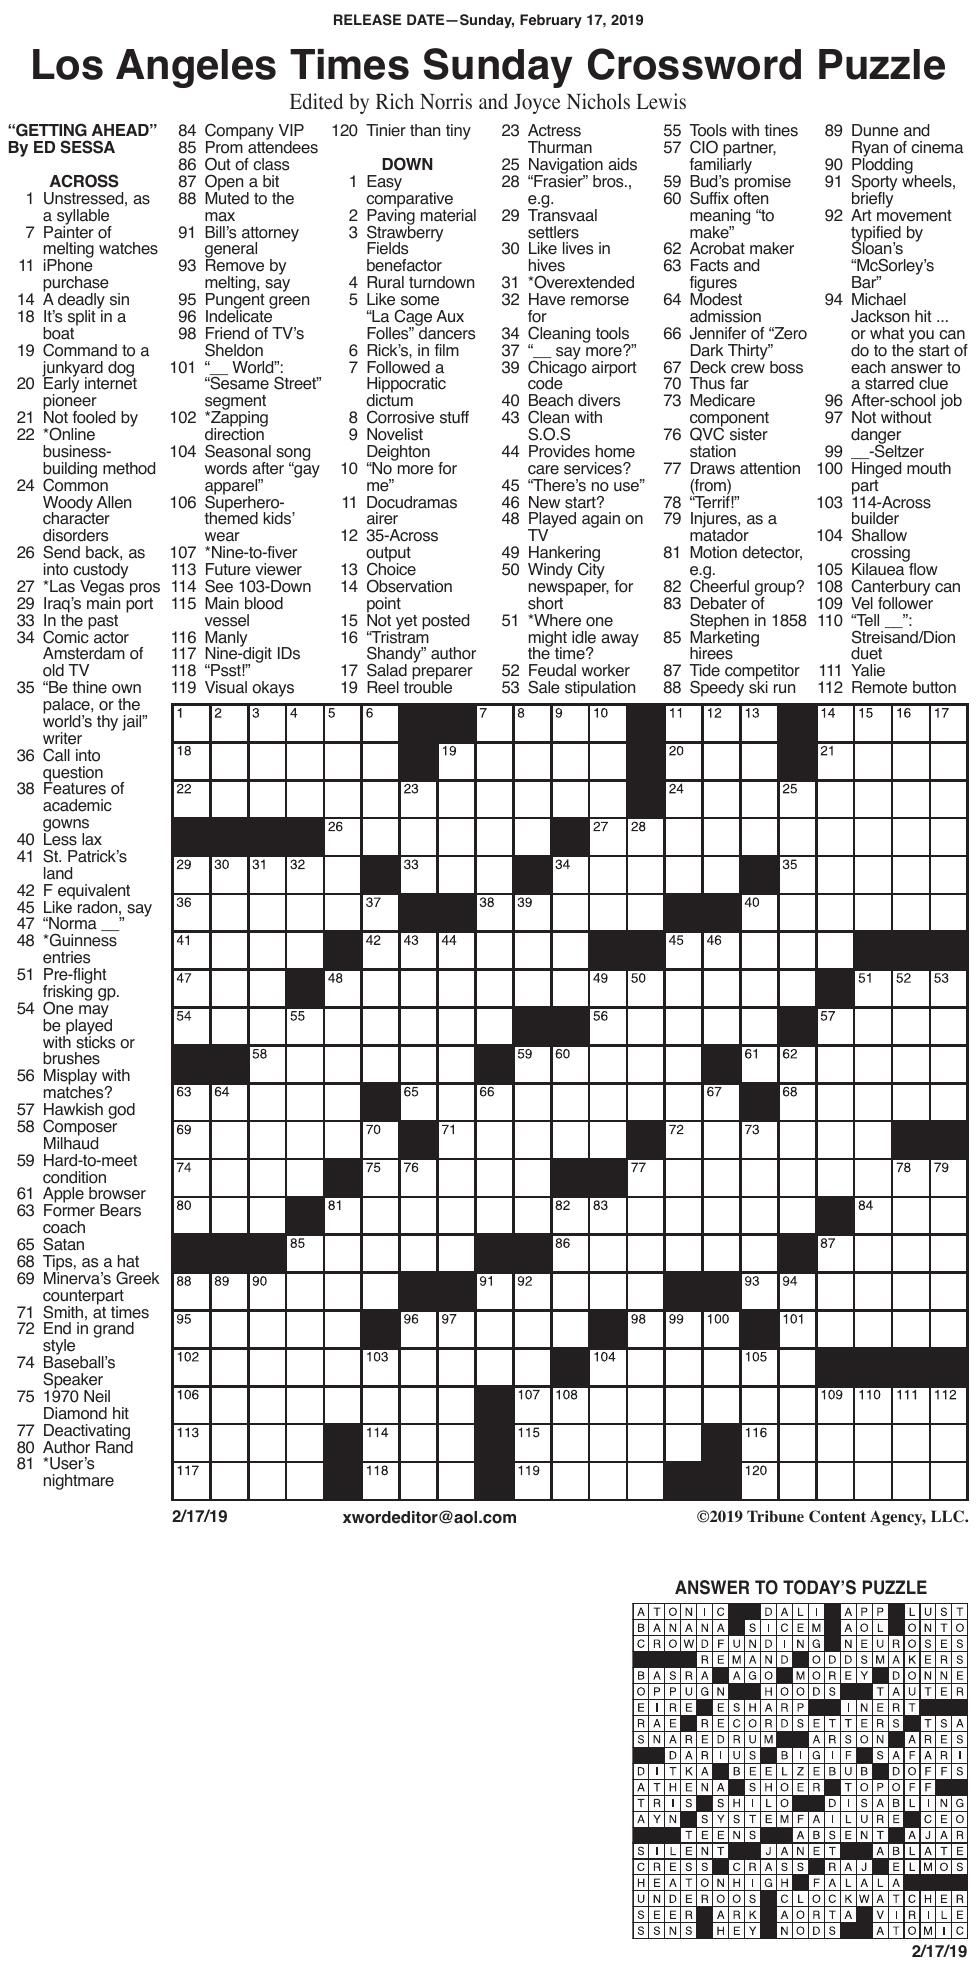 La Times Crossword Printable 2020